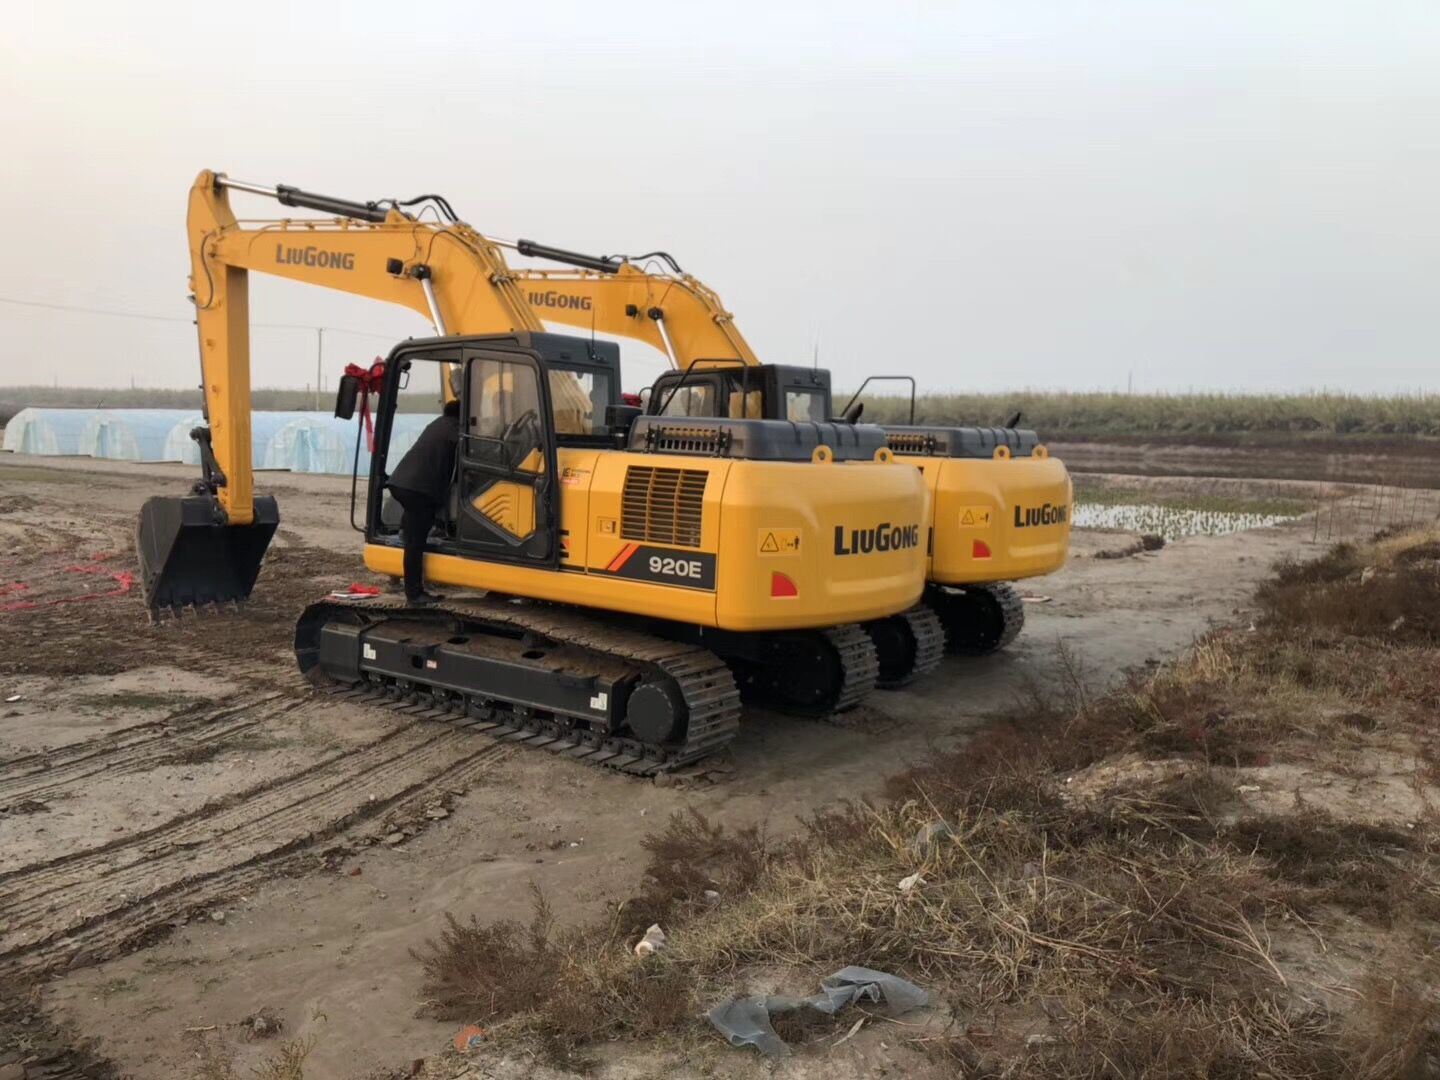 Liugong 20 Ton Crawler Excavator 920e Cheap Excavators with Quick Hitch